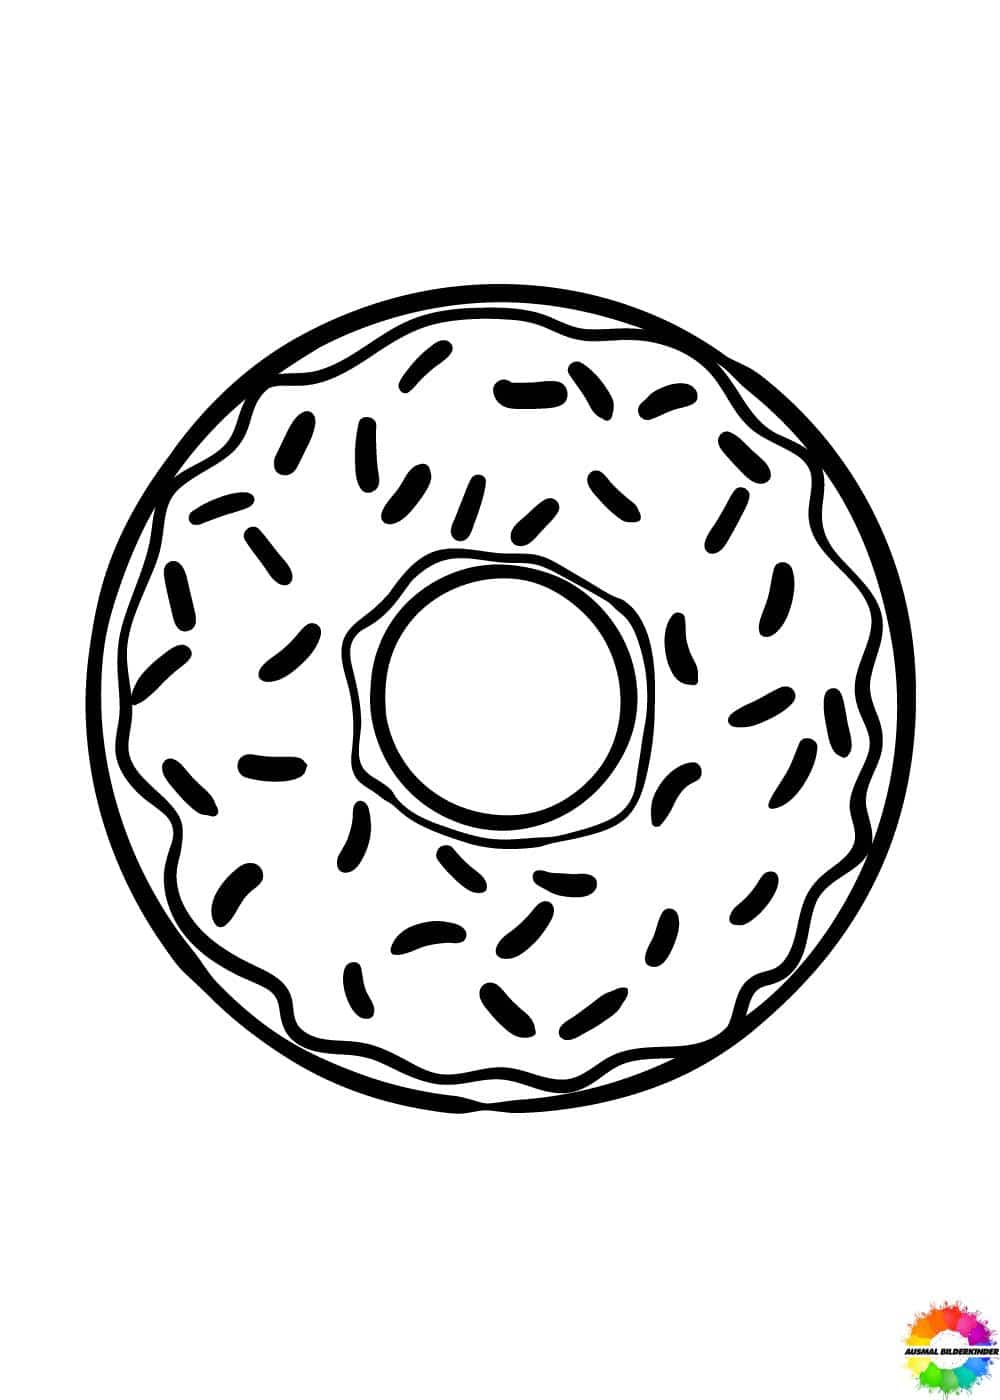 Donuts-Ausmalbilder-ausmalbilderkinder-de-26